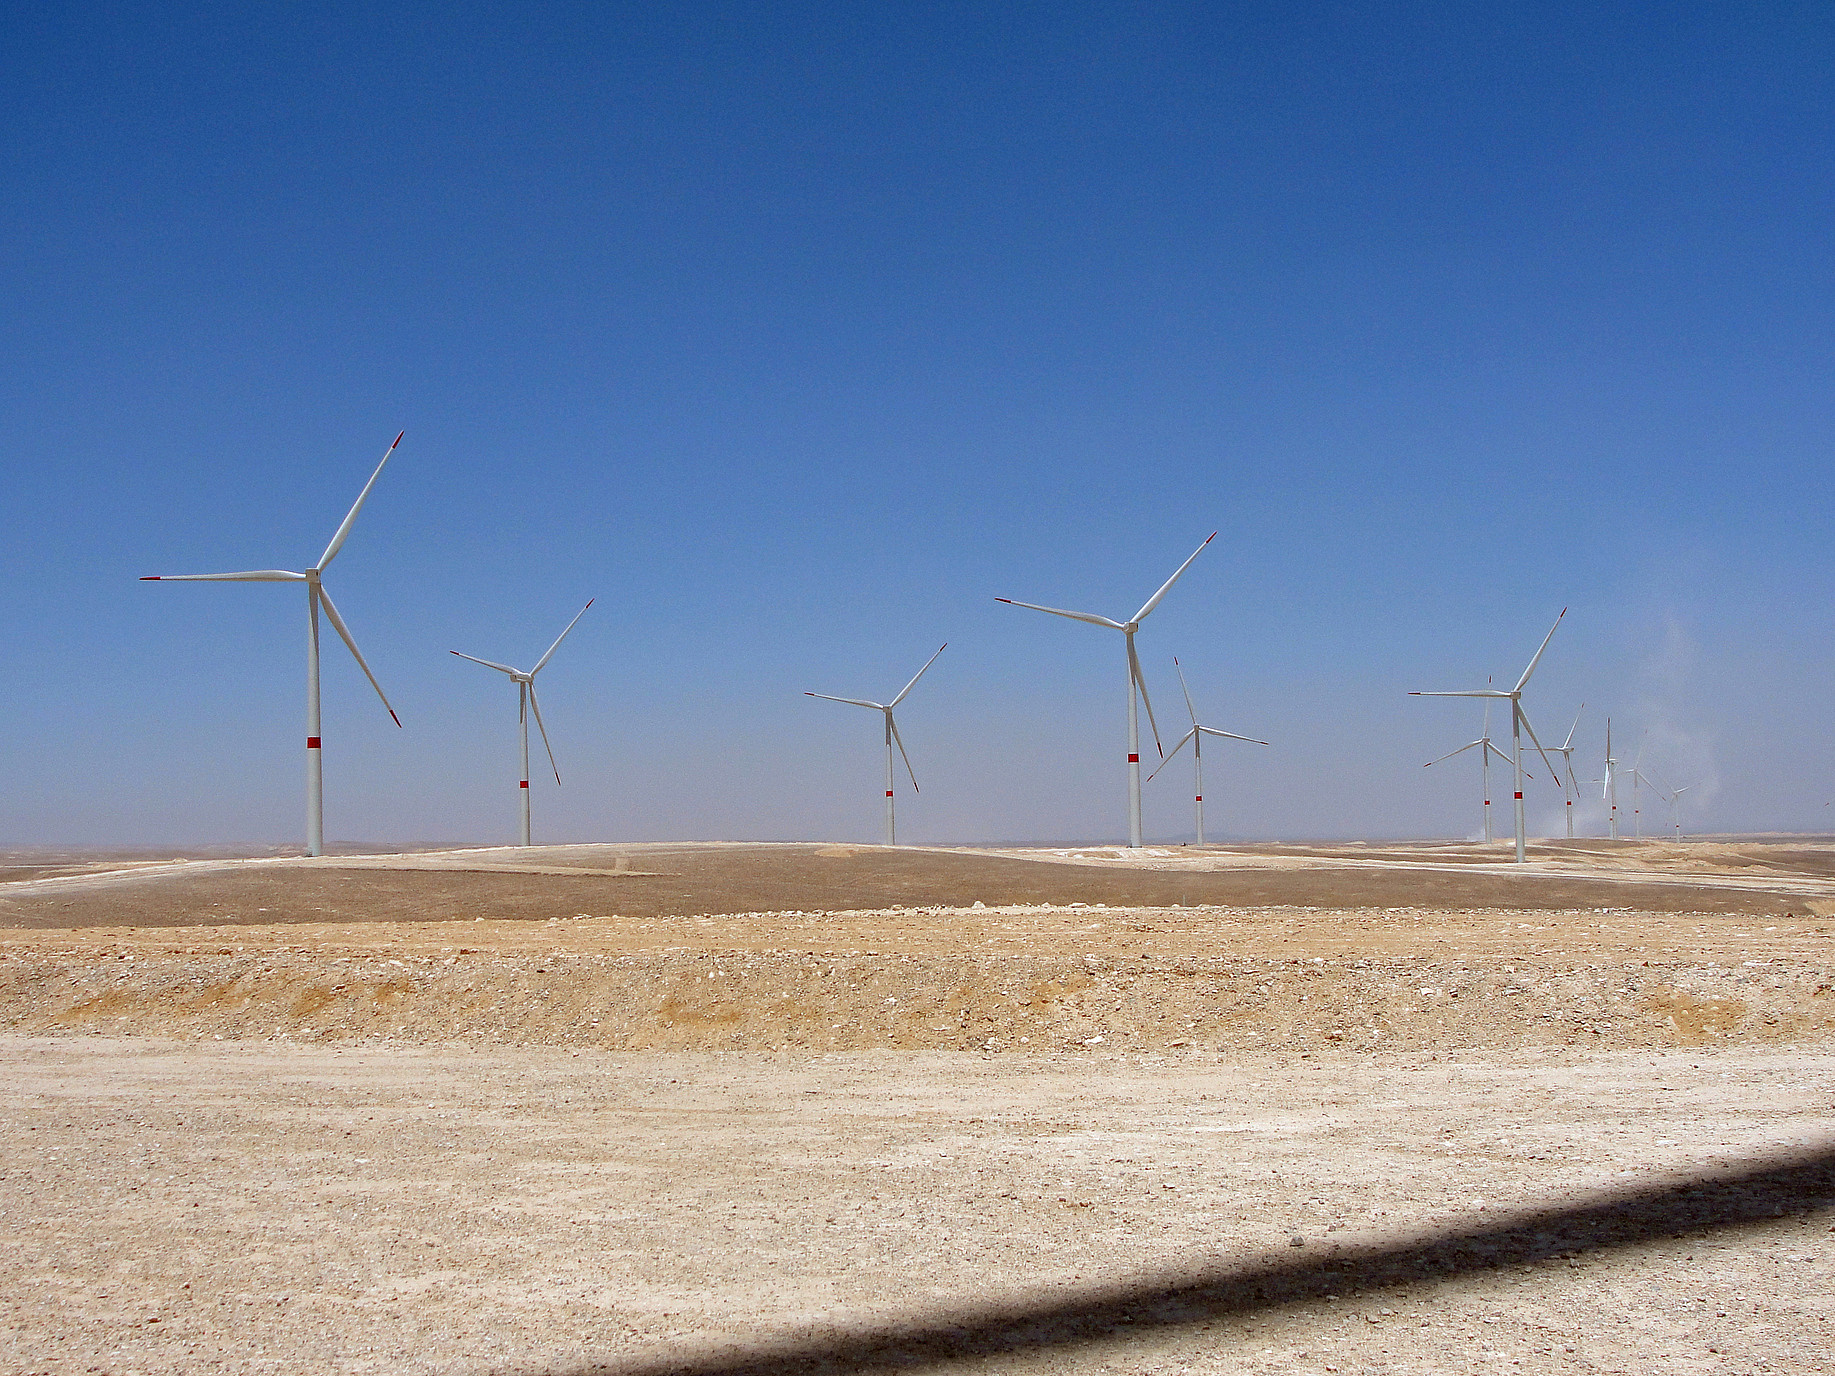 Windräder in Jordanien